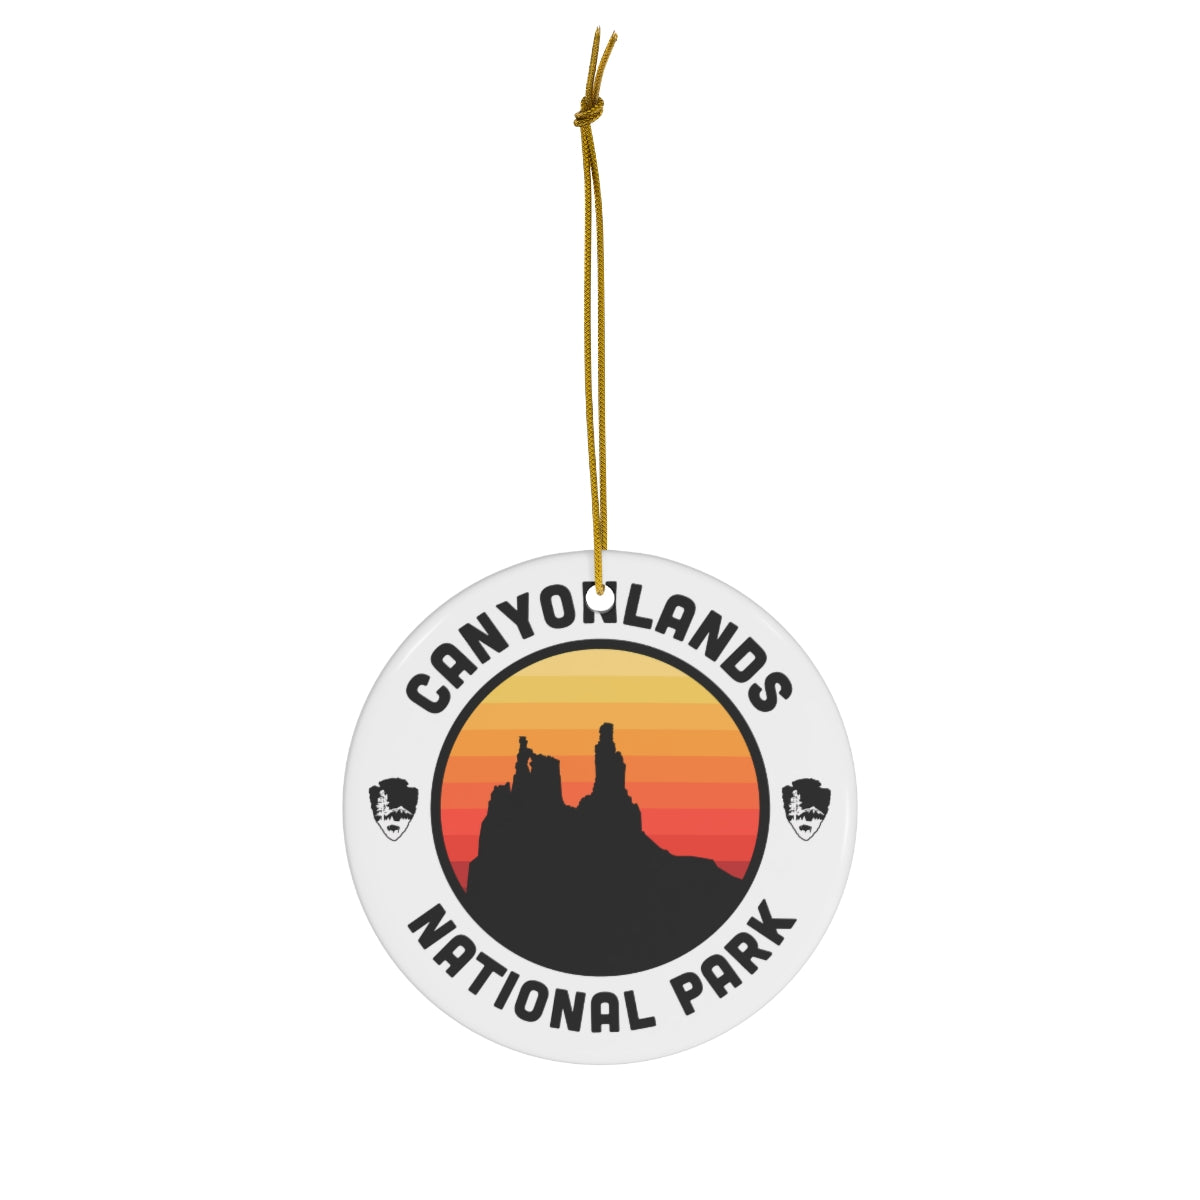 Canyonlands National Park Ornament - Round Emblem Design